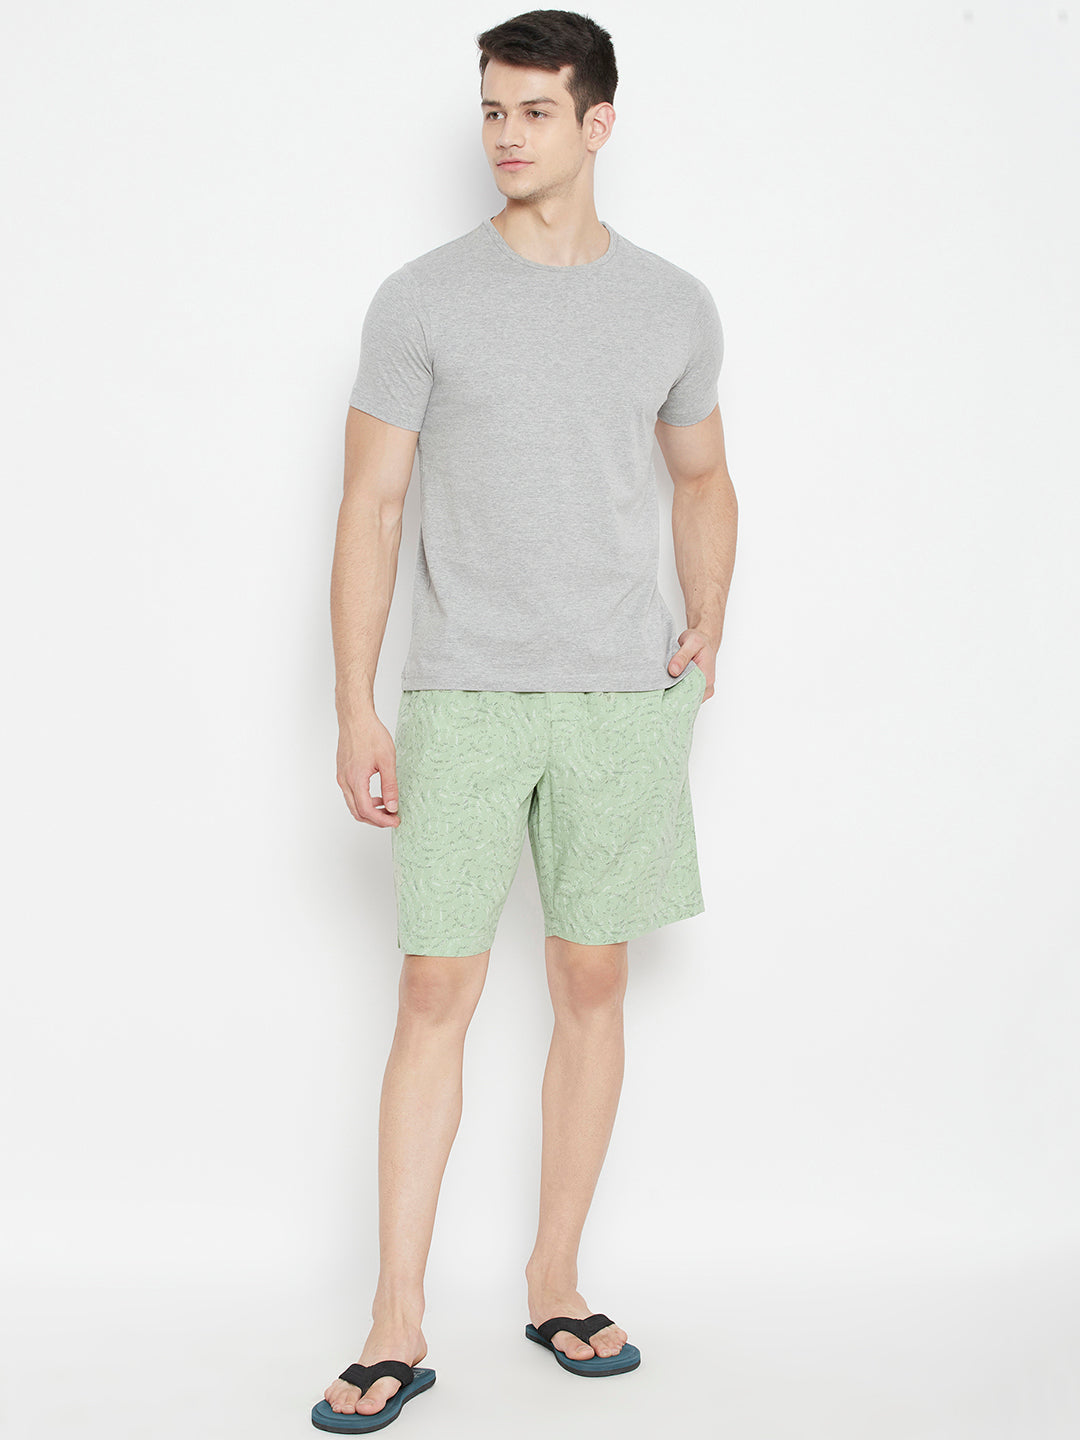 Mint Green Printed Slim Fit Lounge Shorts - Men Lounge Shorts